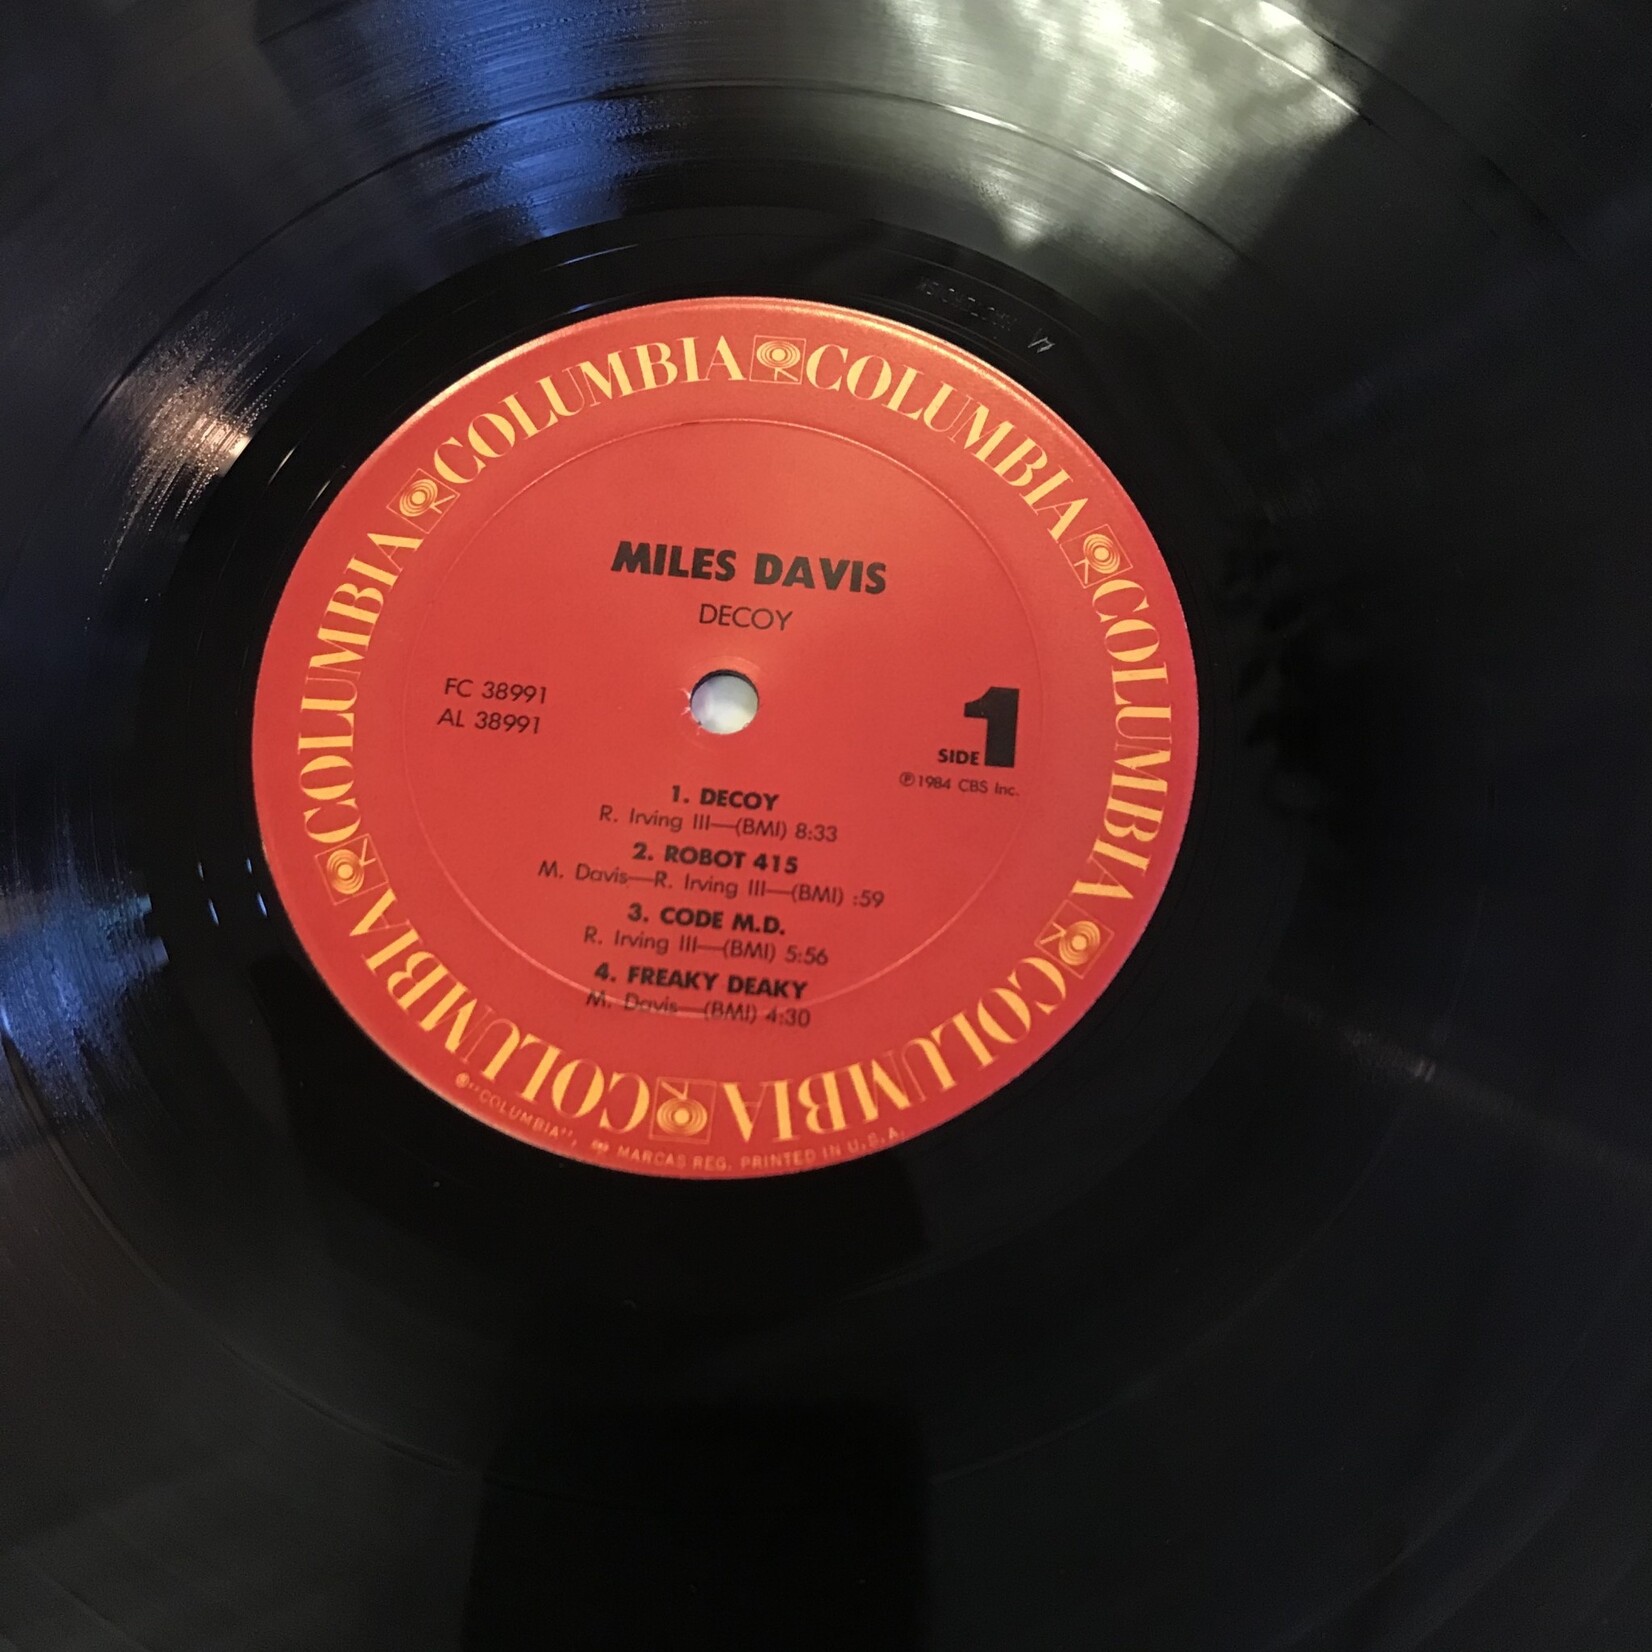 Miles Davis - Decoy - FC38991 - Vinyl LP (USED)